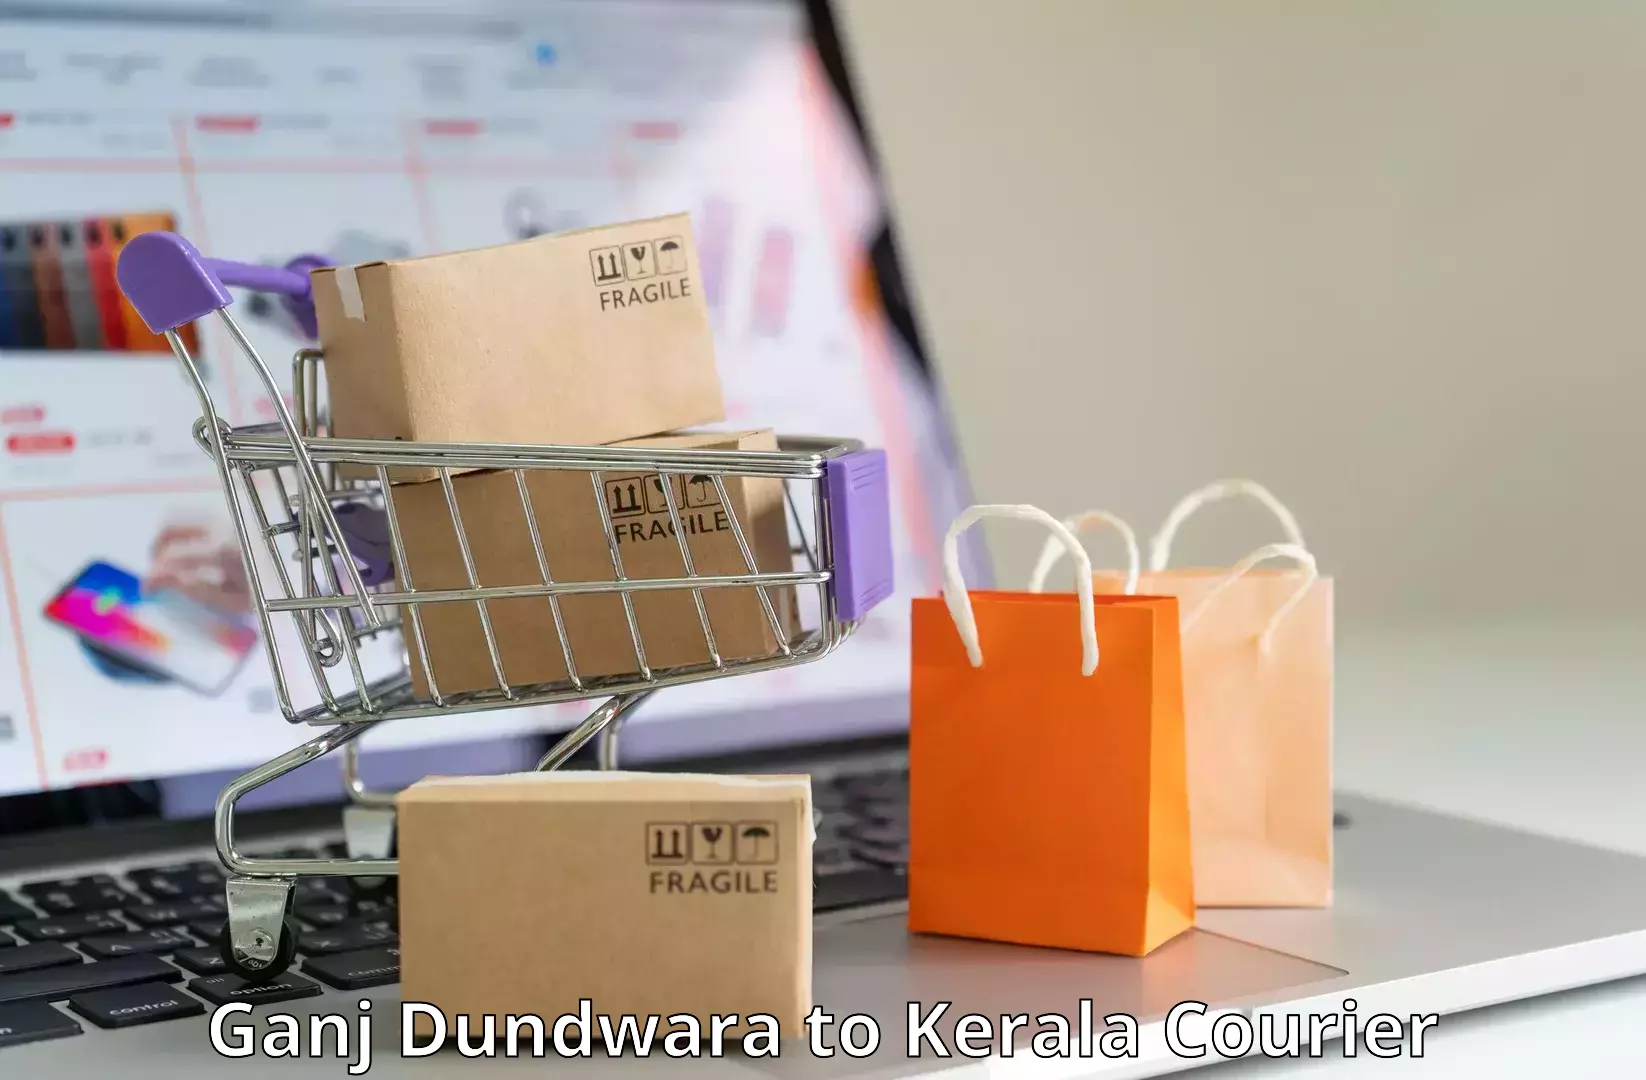 Flexible delivery schedules Ganj Dundwara to Kattappana